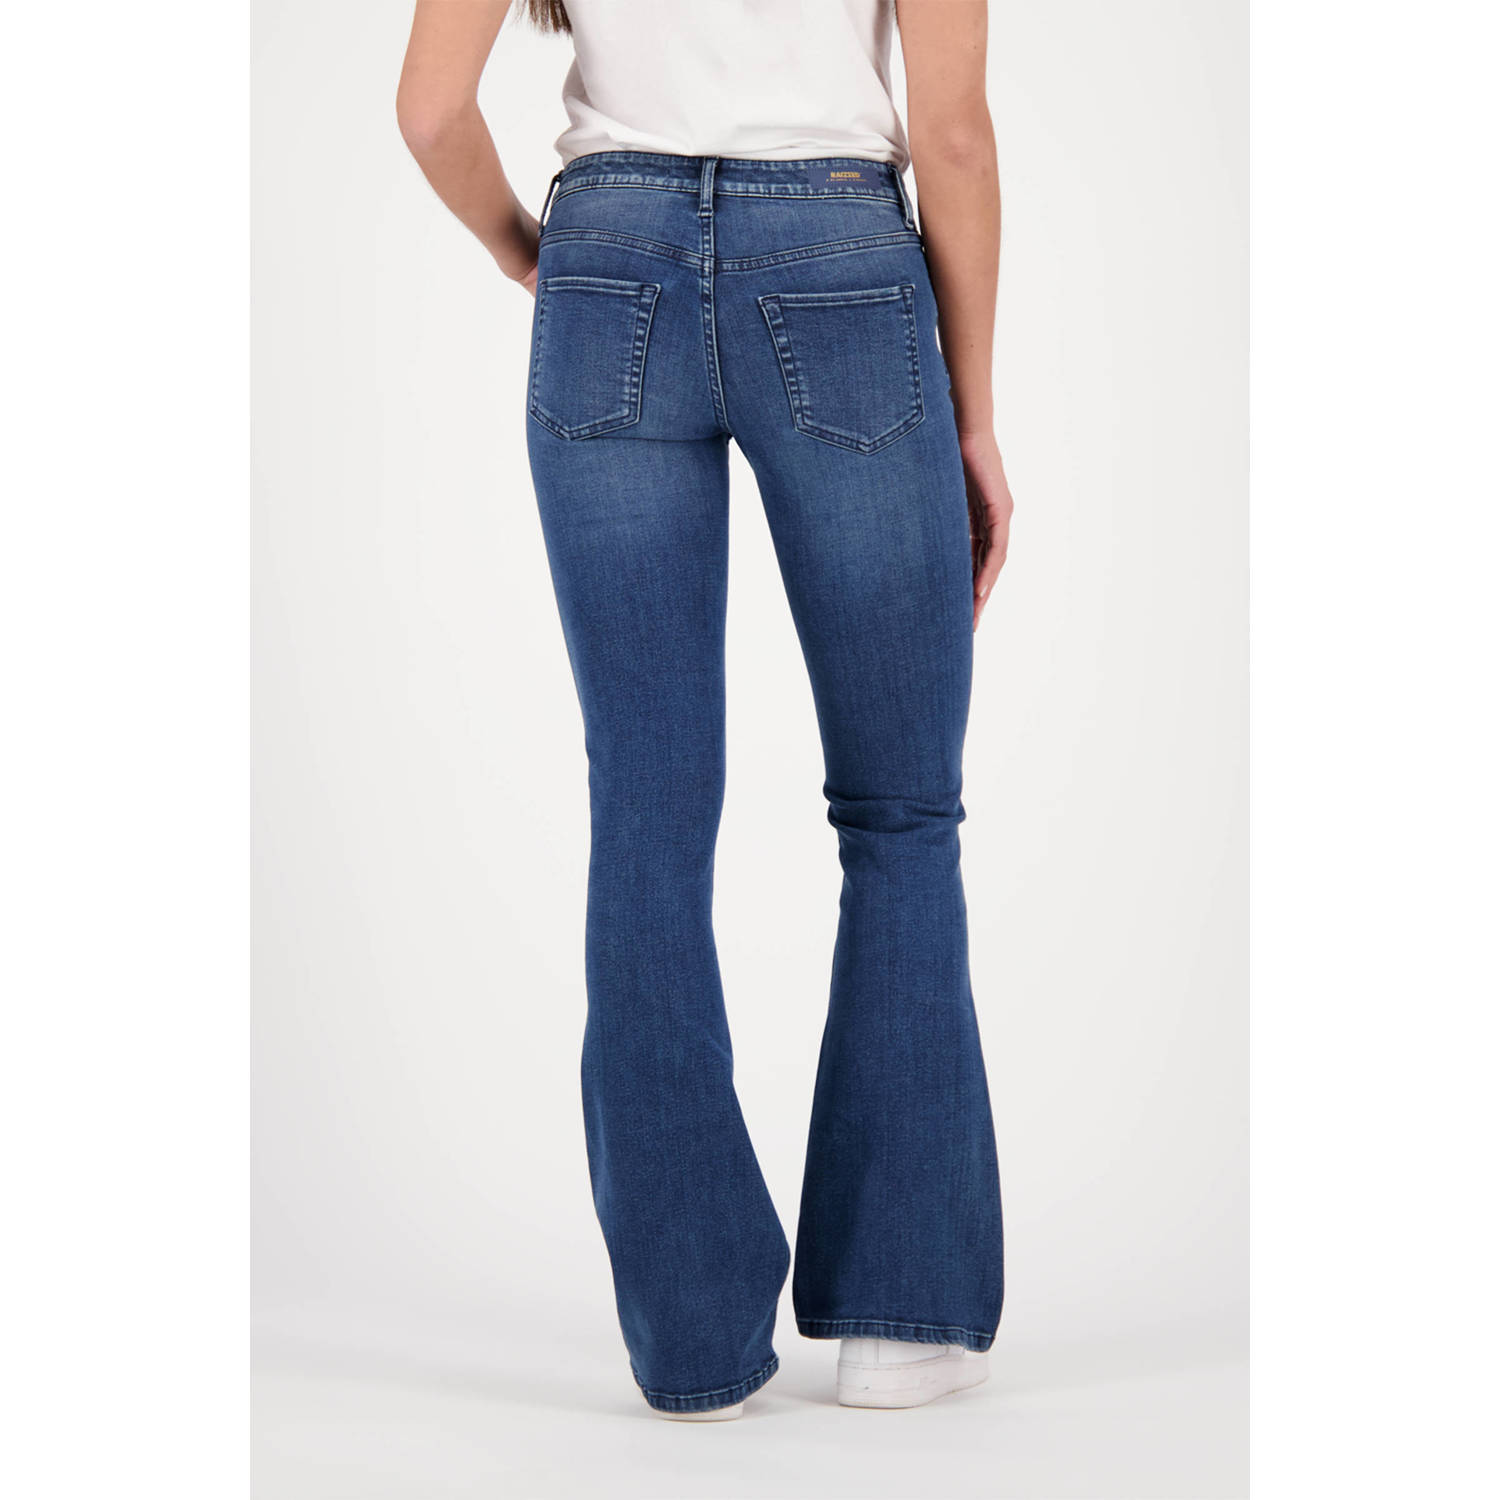 Raizzed high waist flared jeans Eclipse dark blue denim